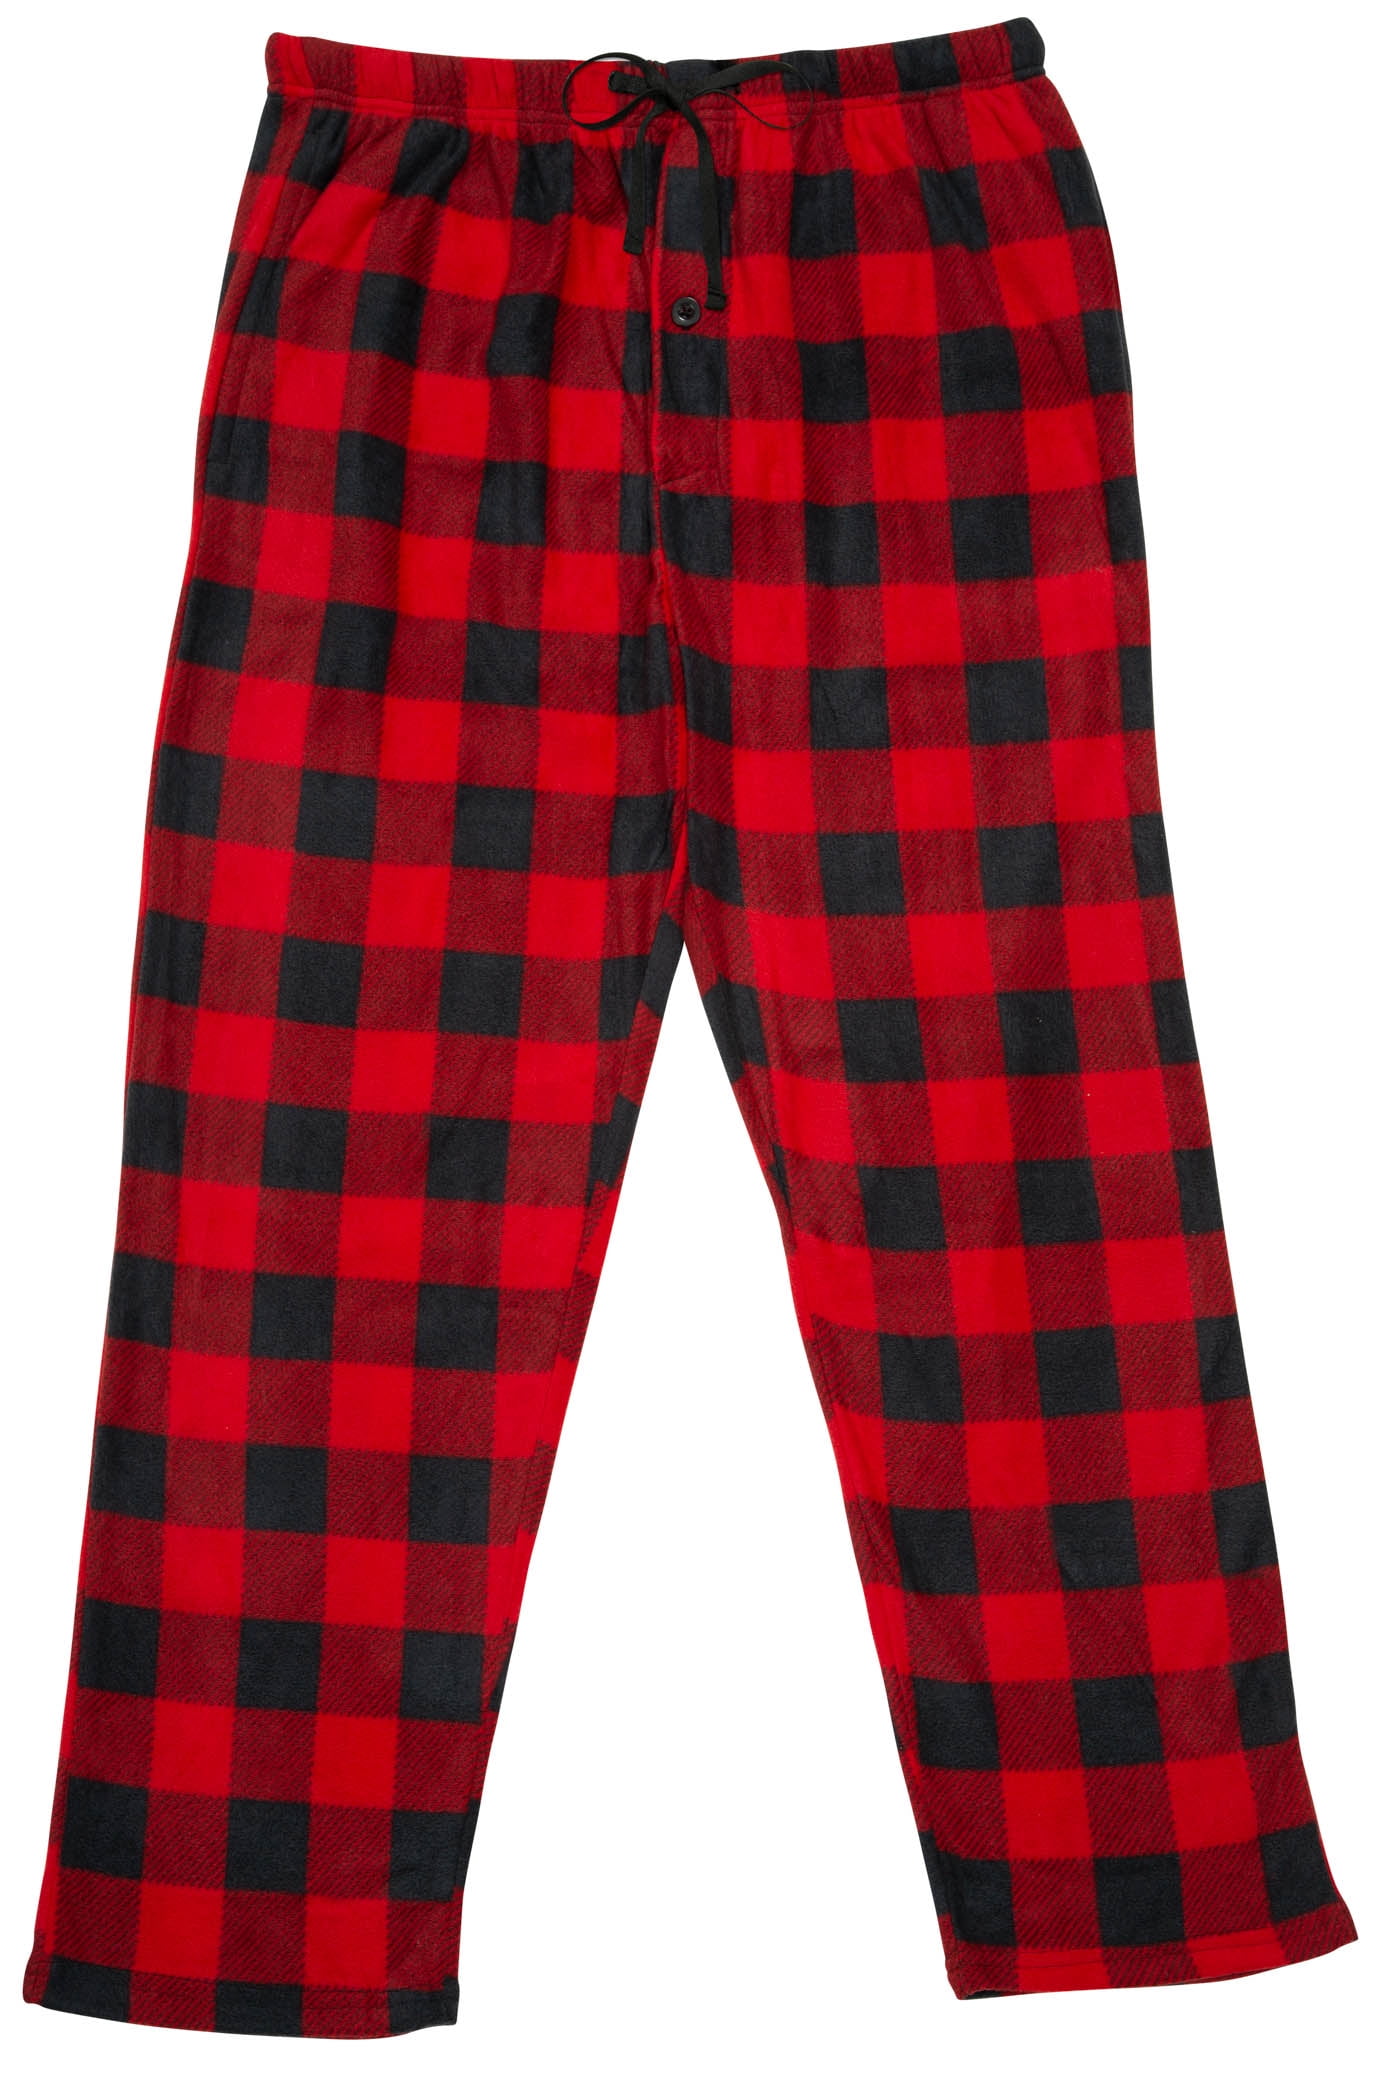 Frisco Red Buffalo Plaid Polar Fleece Unisex Adult Pajama Pants